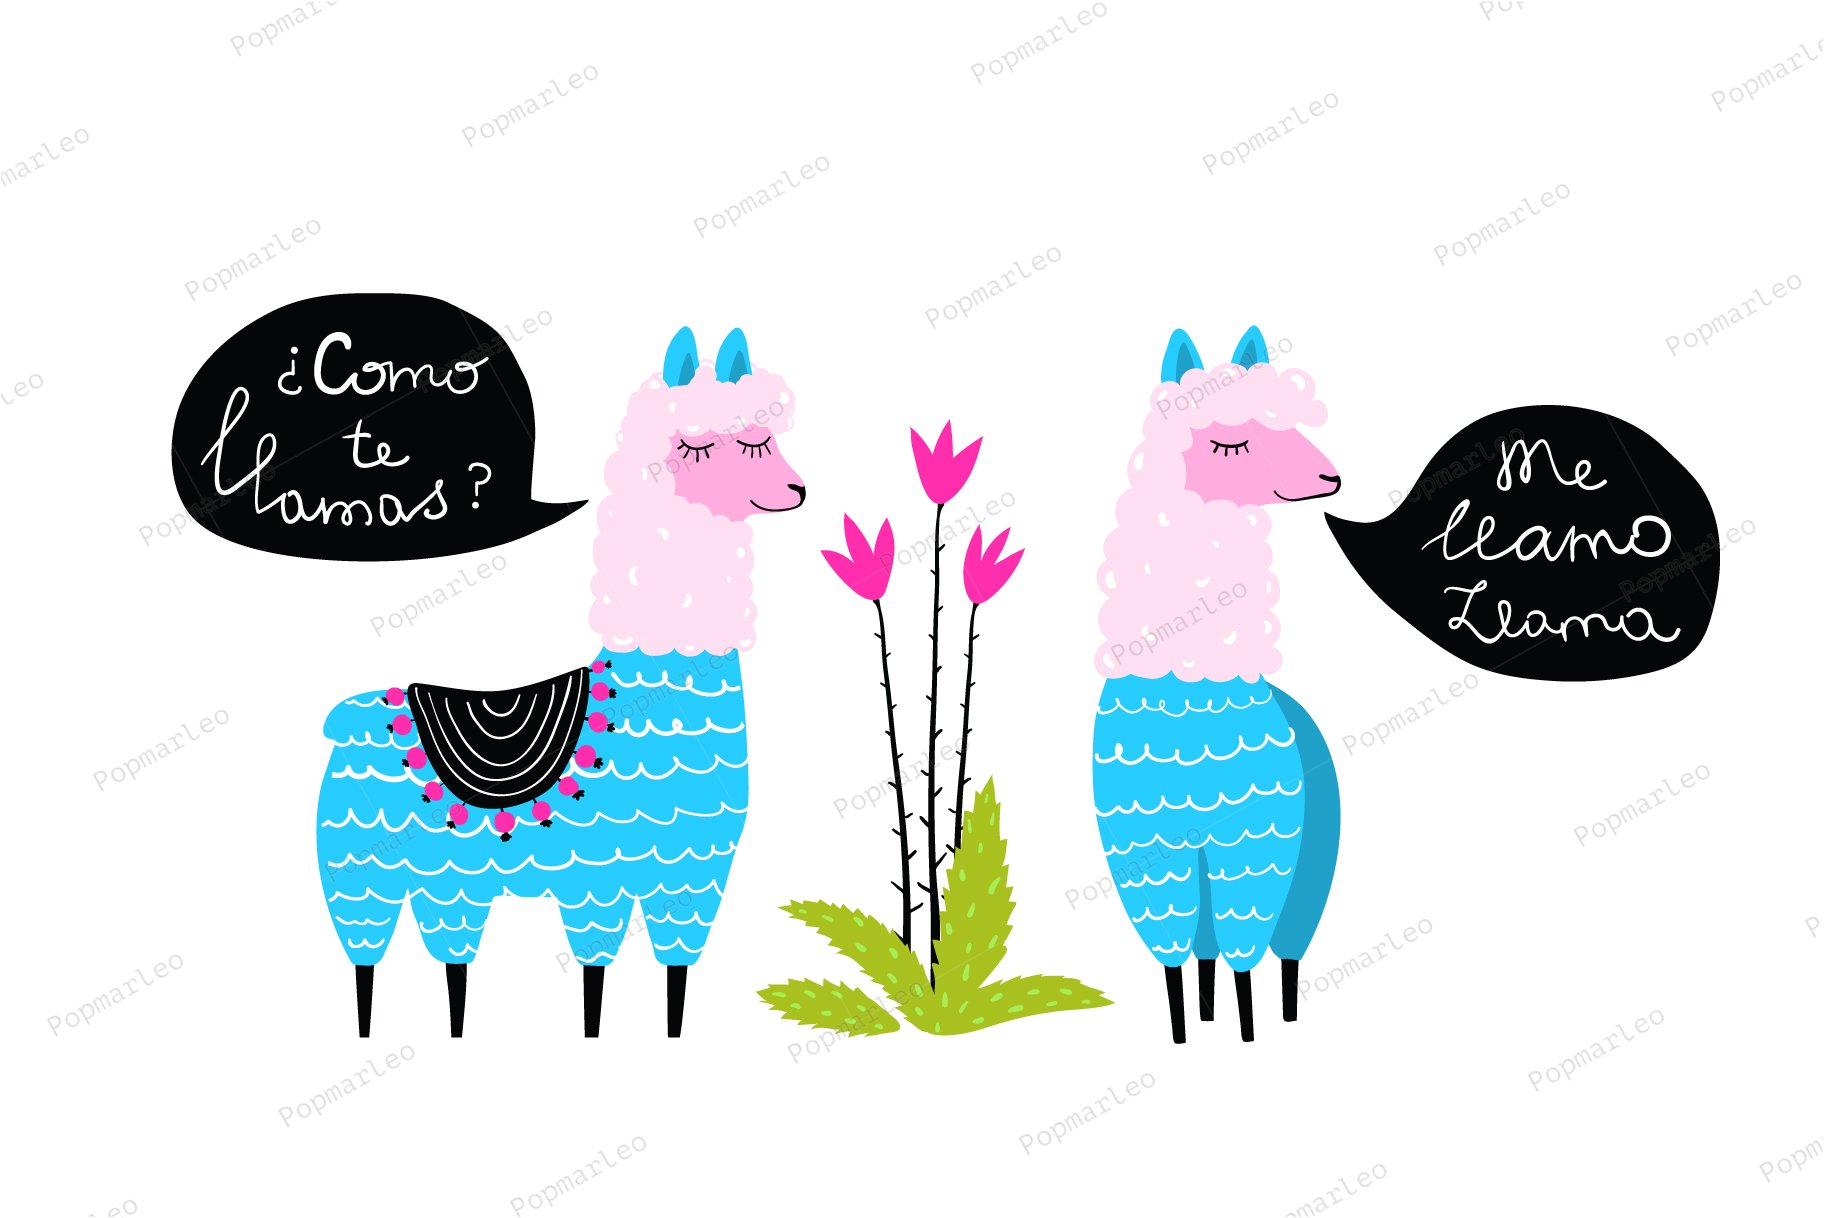 Fun Llama and Cacti Me LLamo Llama preview image.